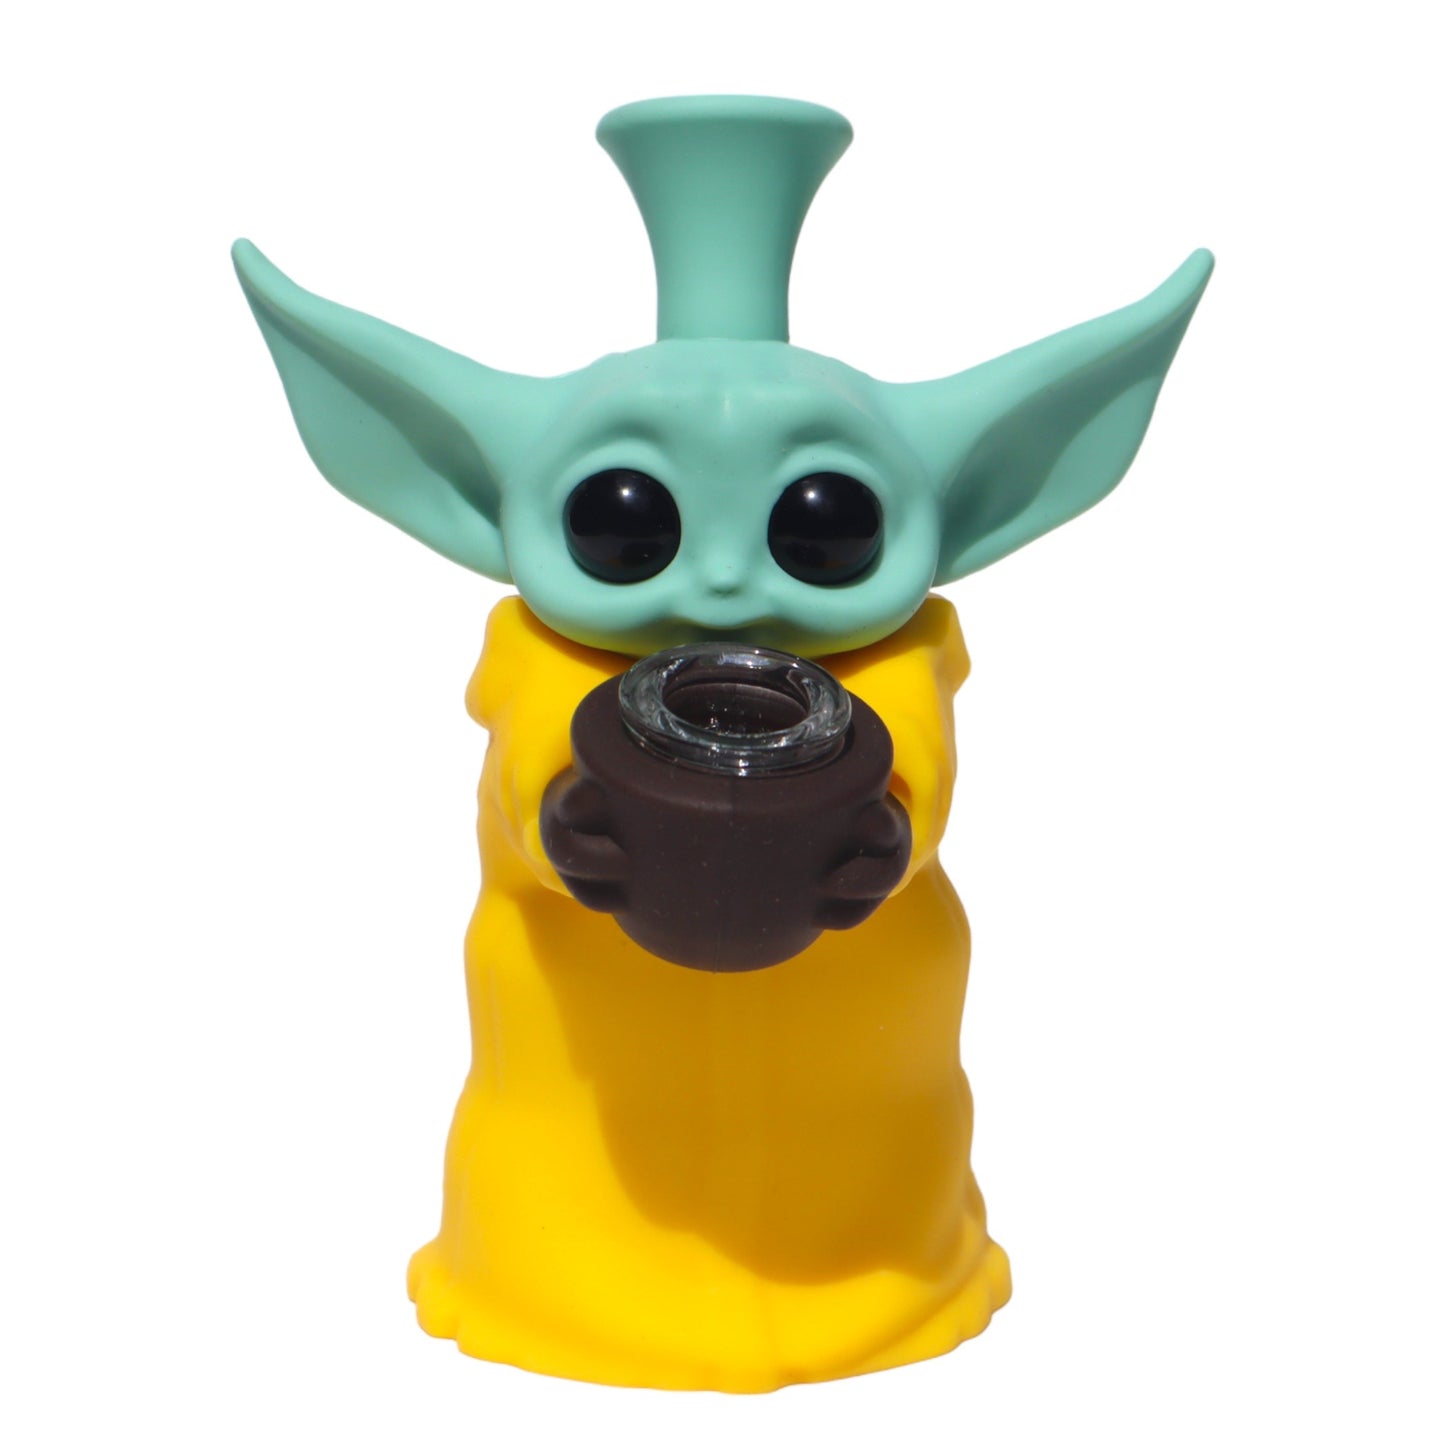 Star Wars Rebel Yoda Silicone Water Bong Pipe - Rebel Grogu " The Rebel" - Yellow